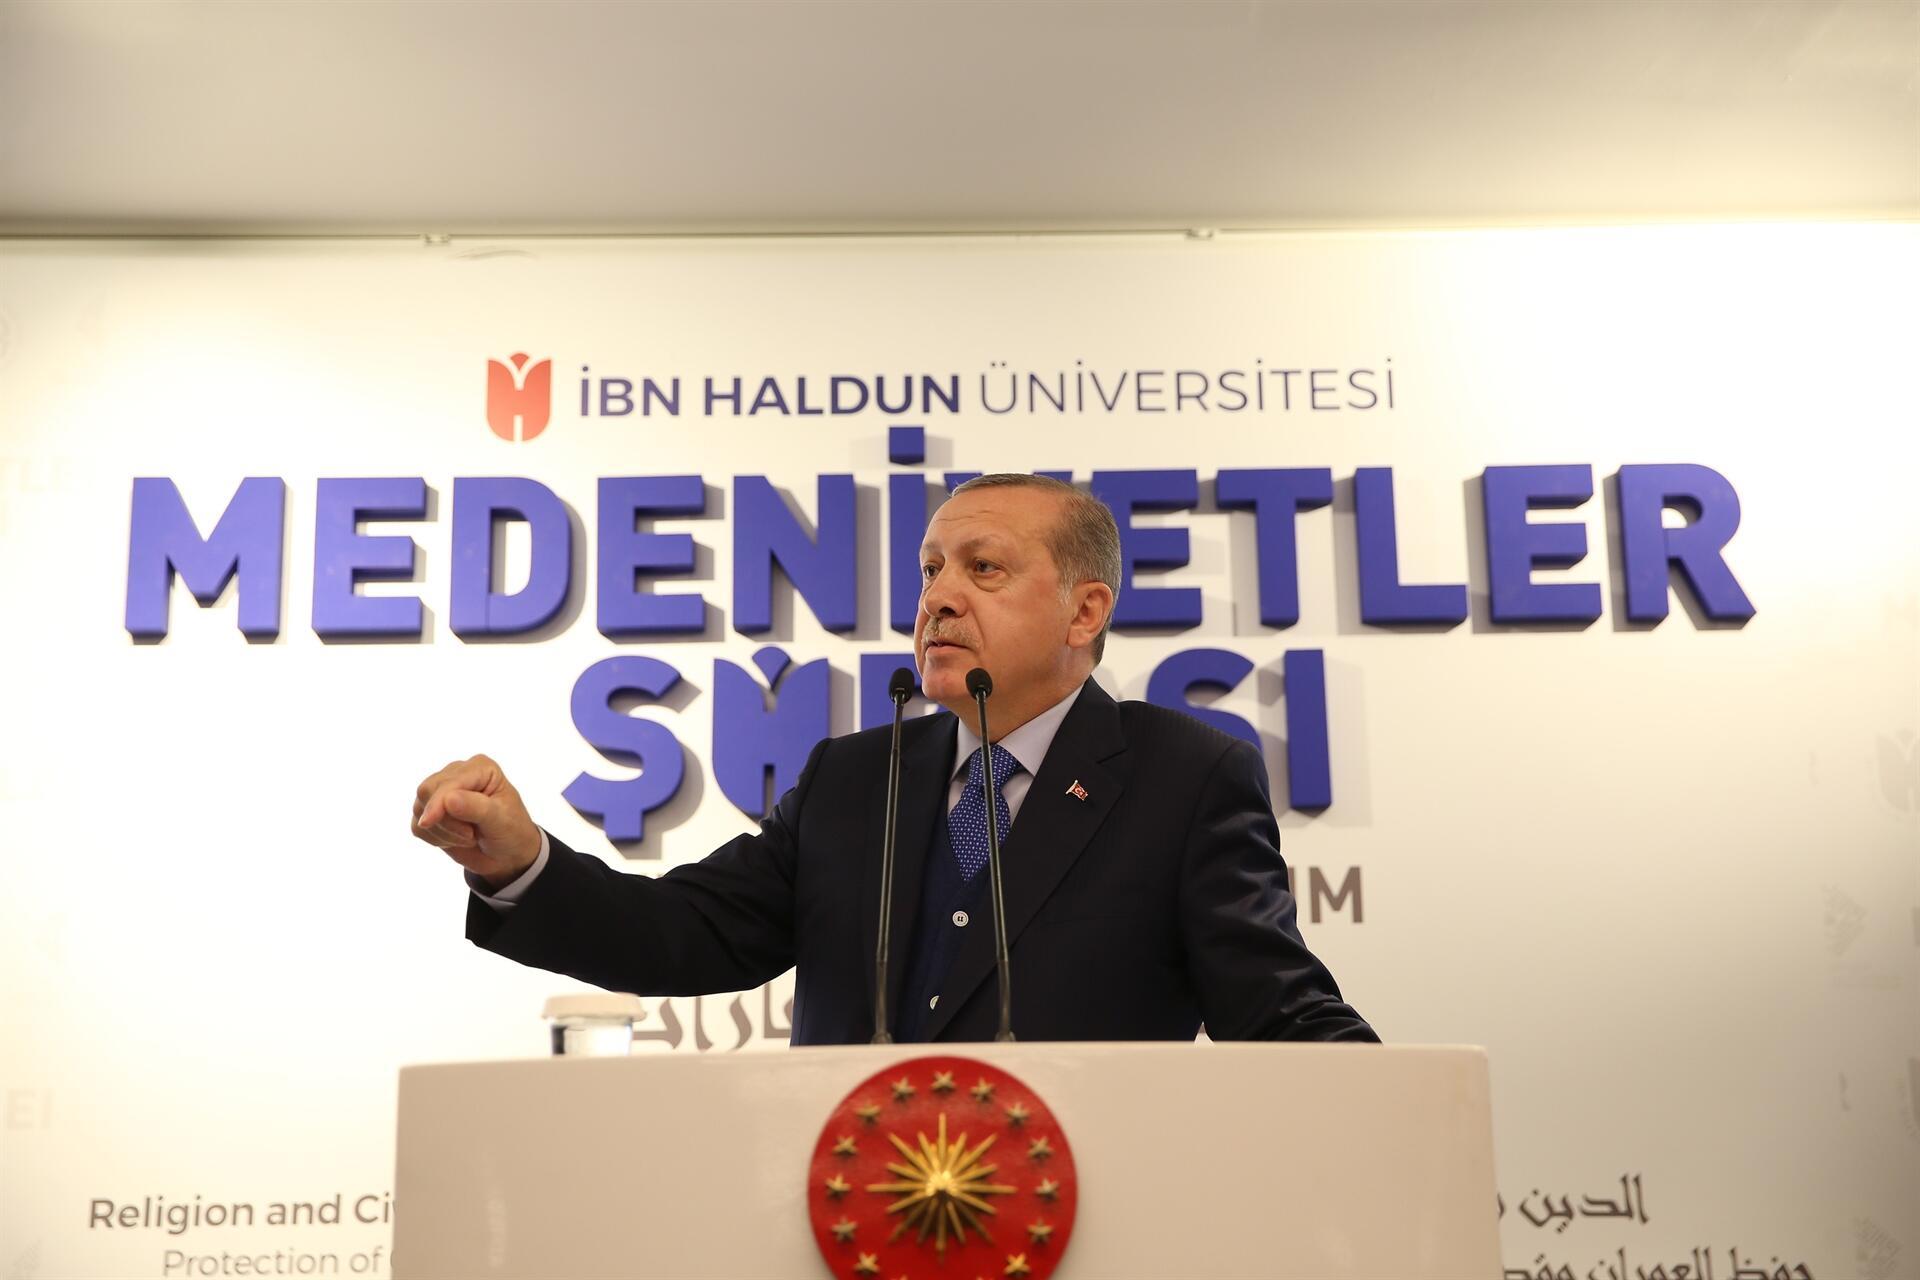 I cannot call US civilized after detention warrants for bodyguards: Erdoğan